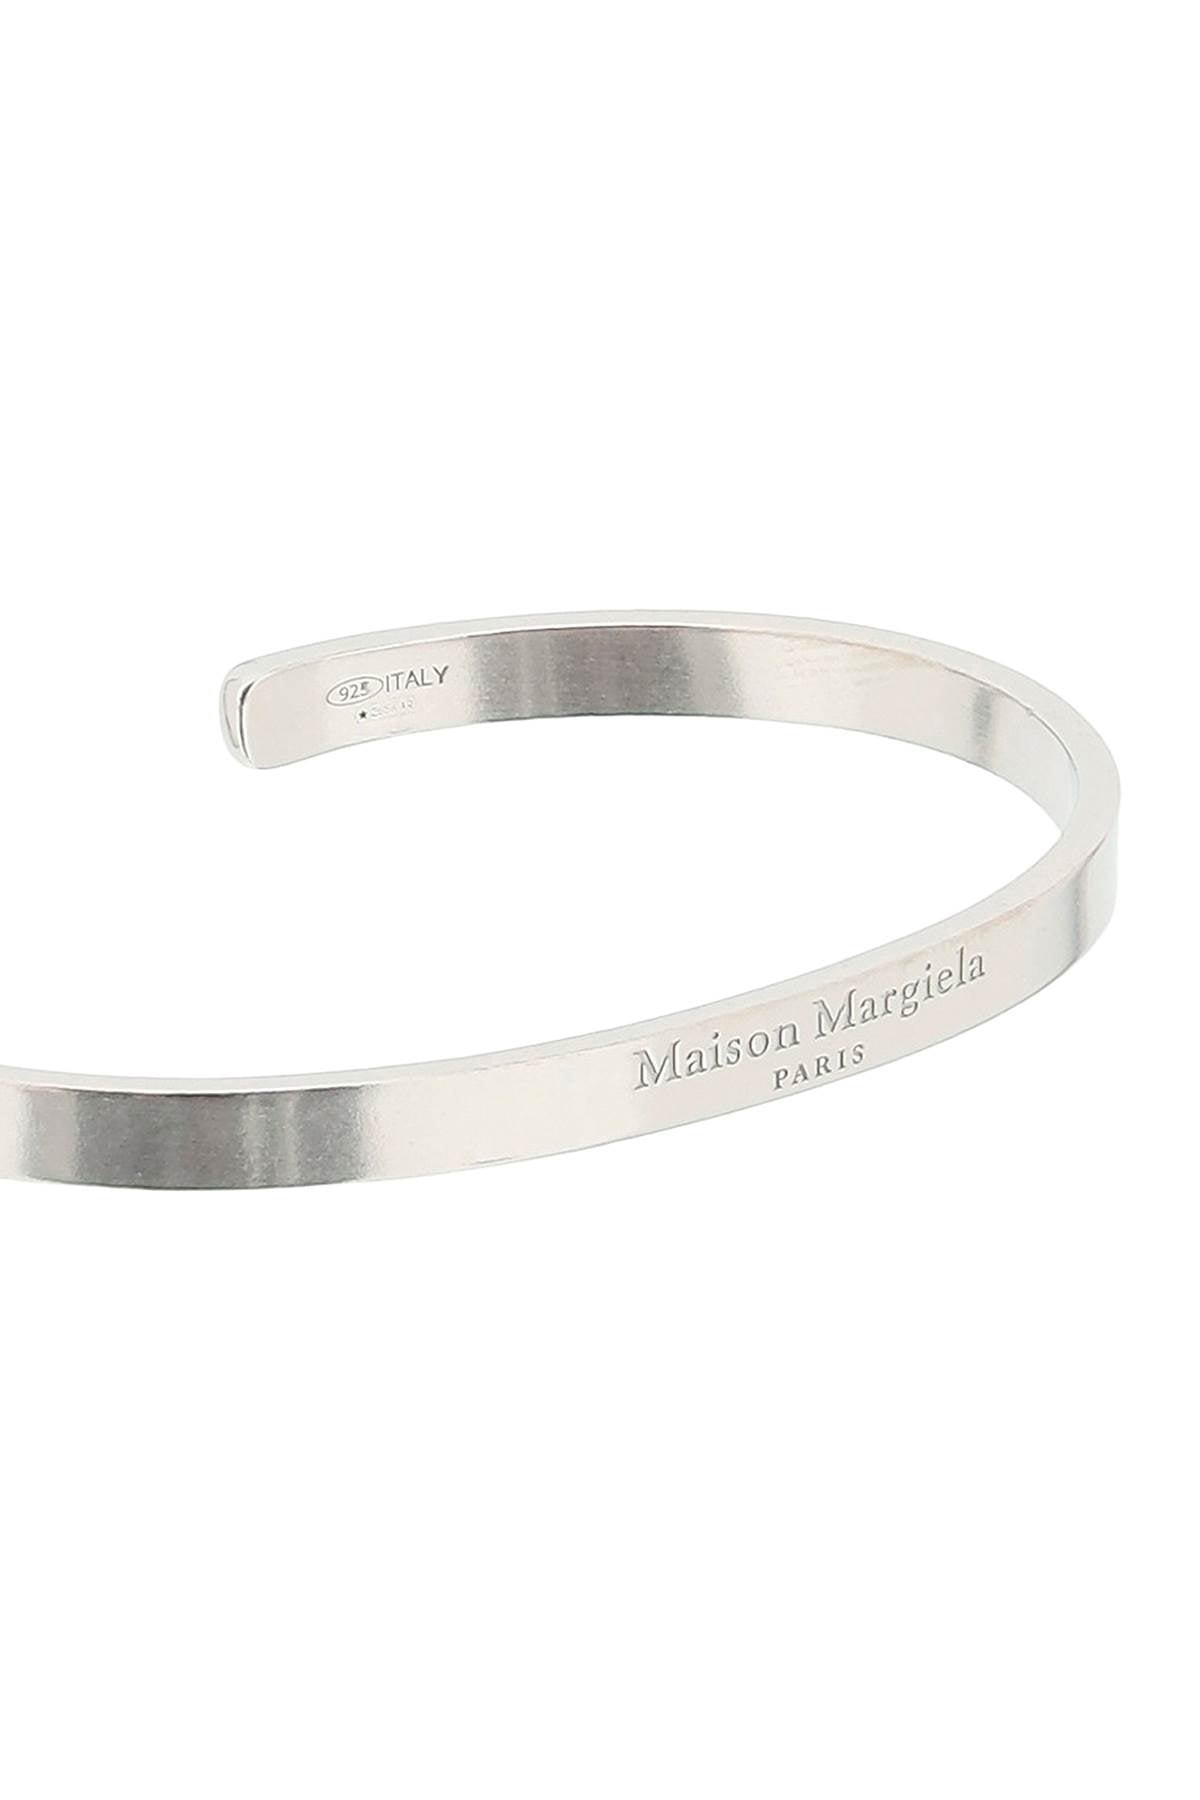 Maison margiela silver cuff bracelet-2